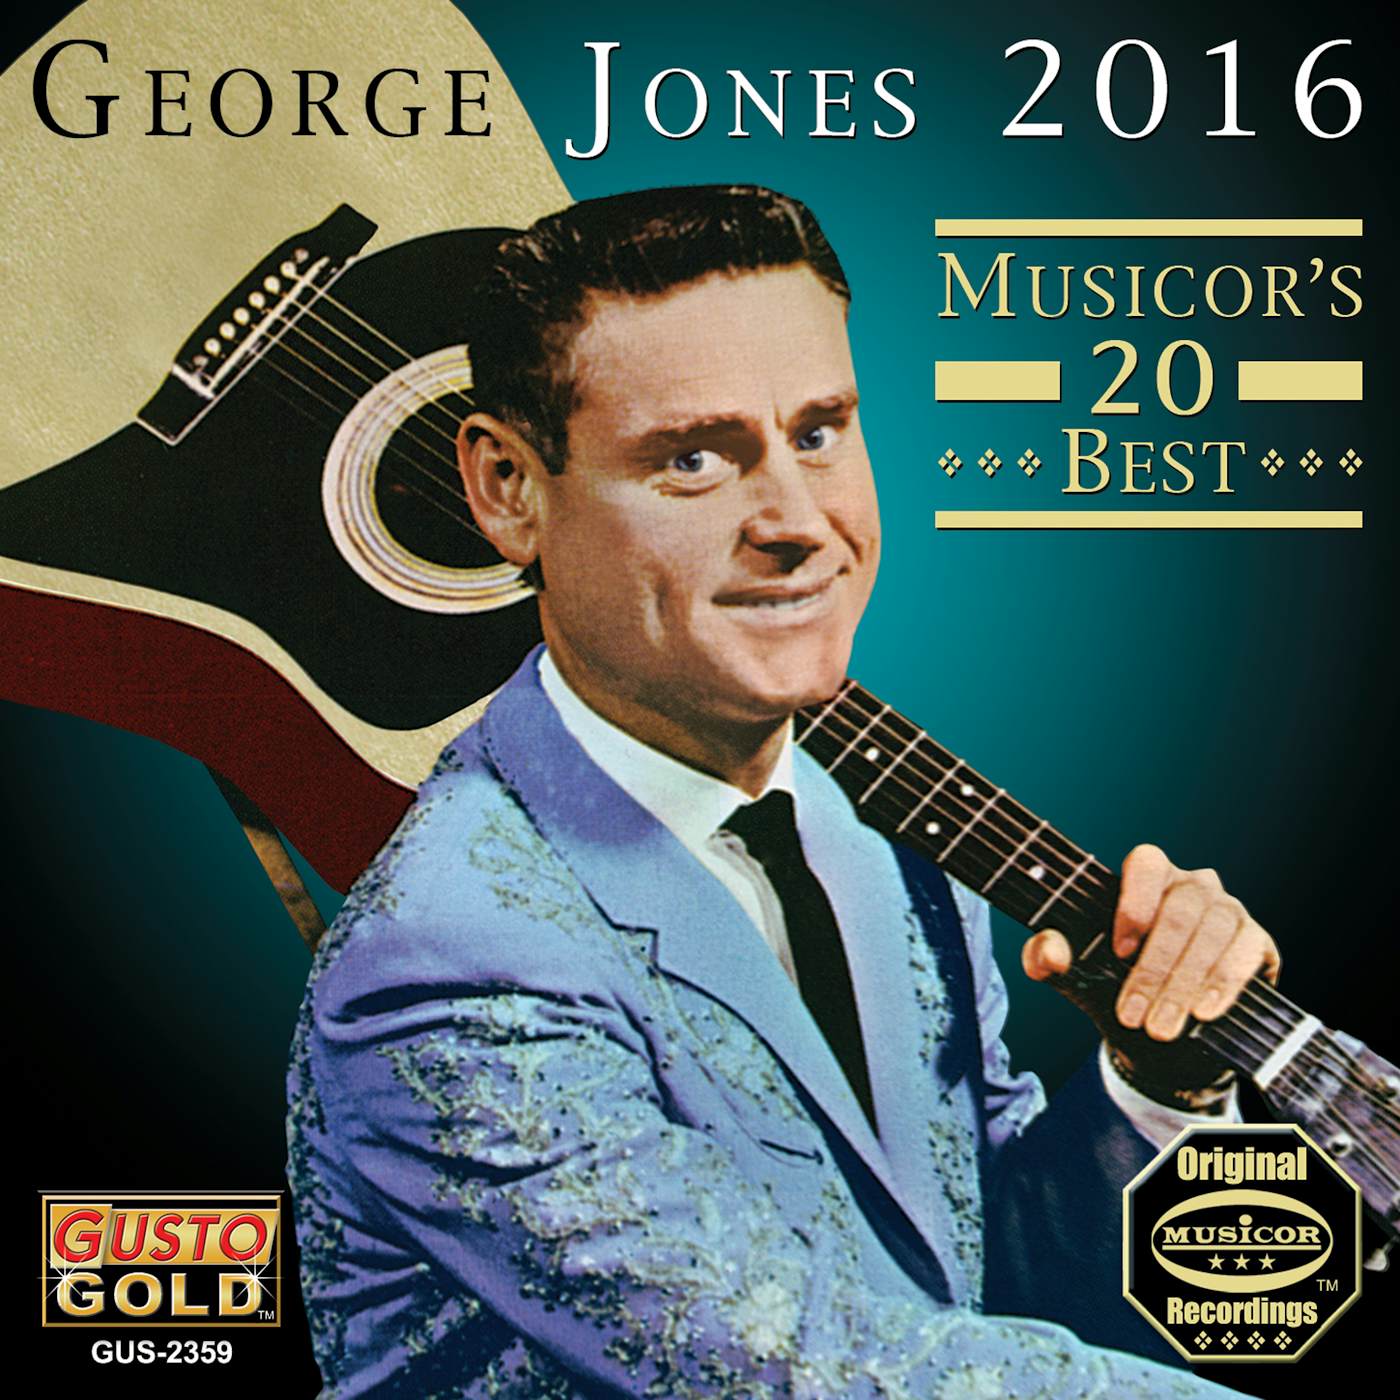 George Jones 2016: MUSICOR'S 20 BEST CD